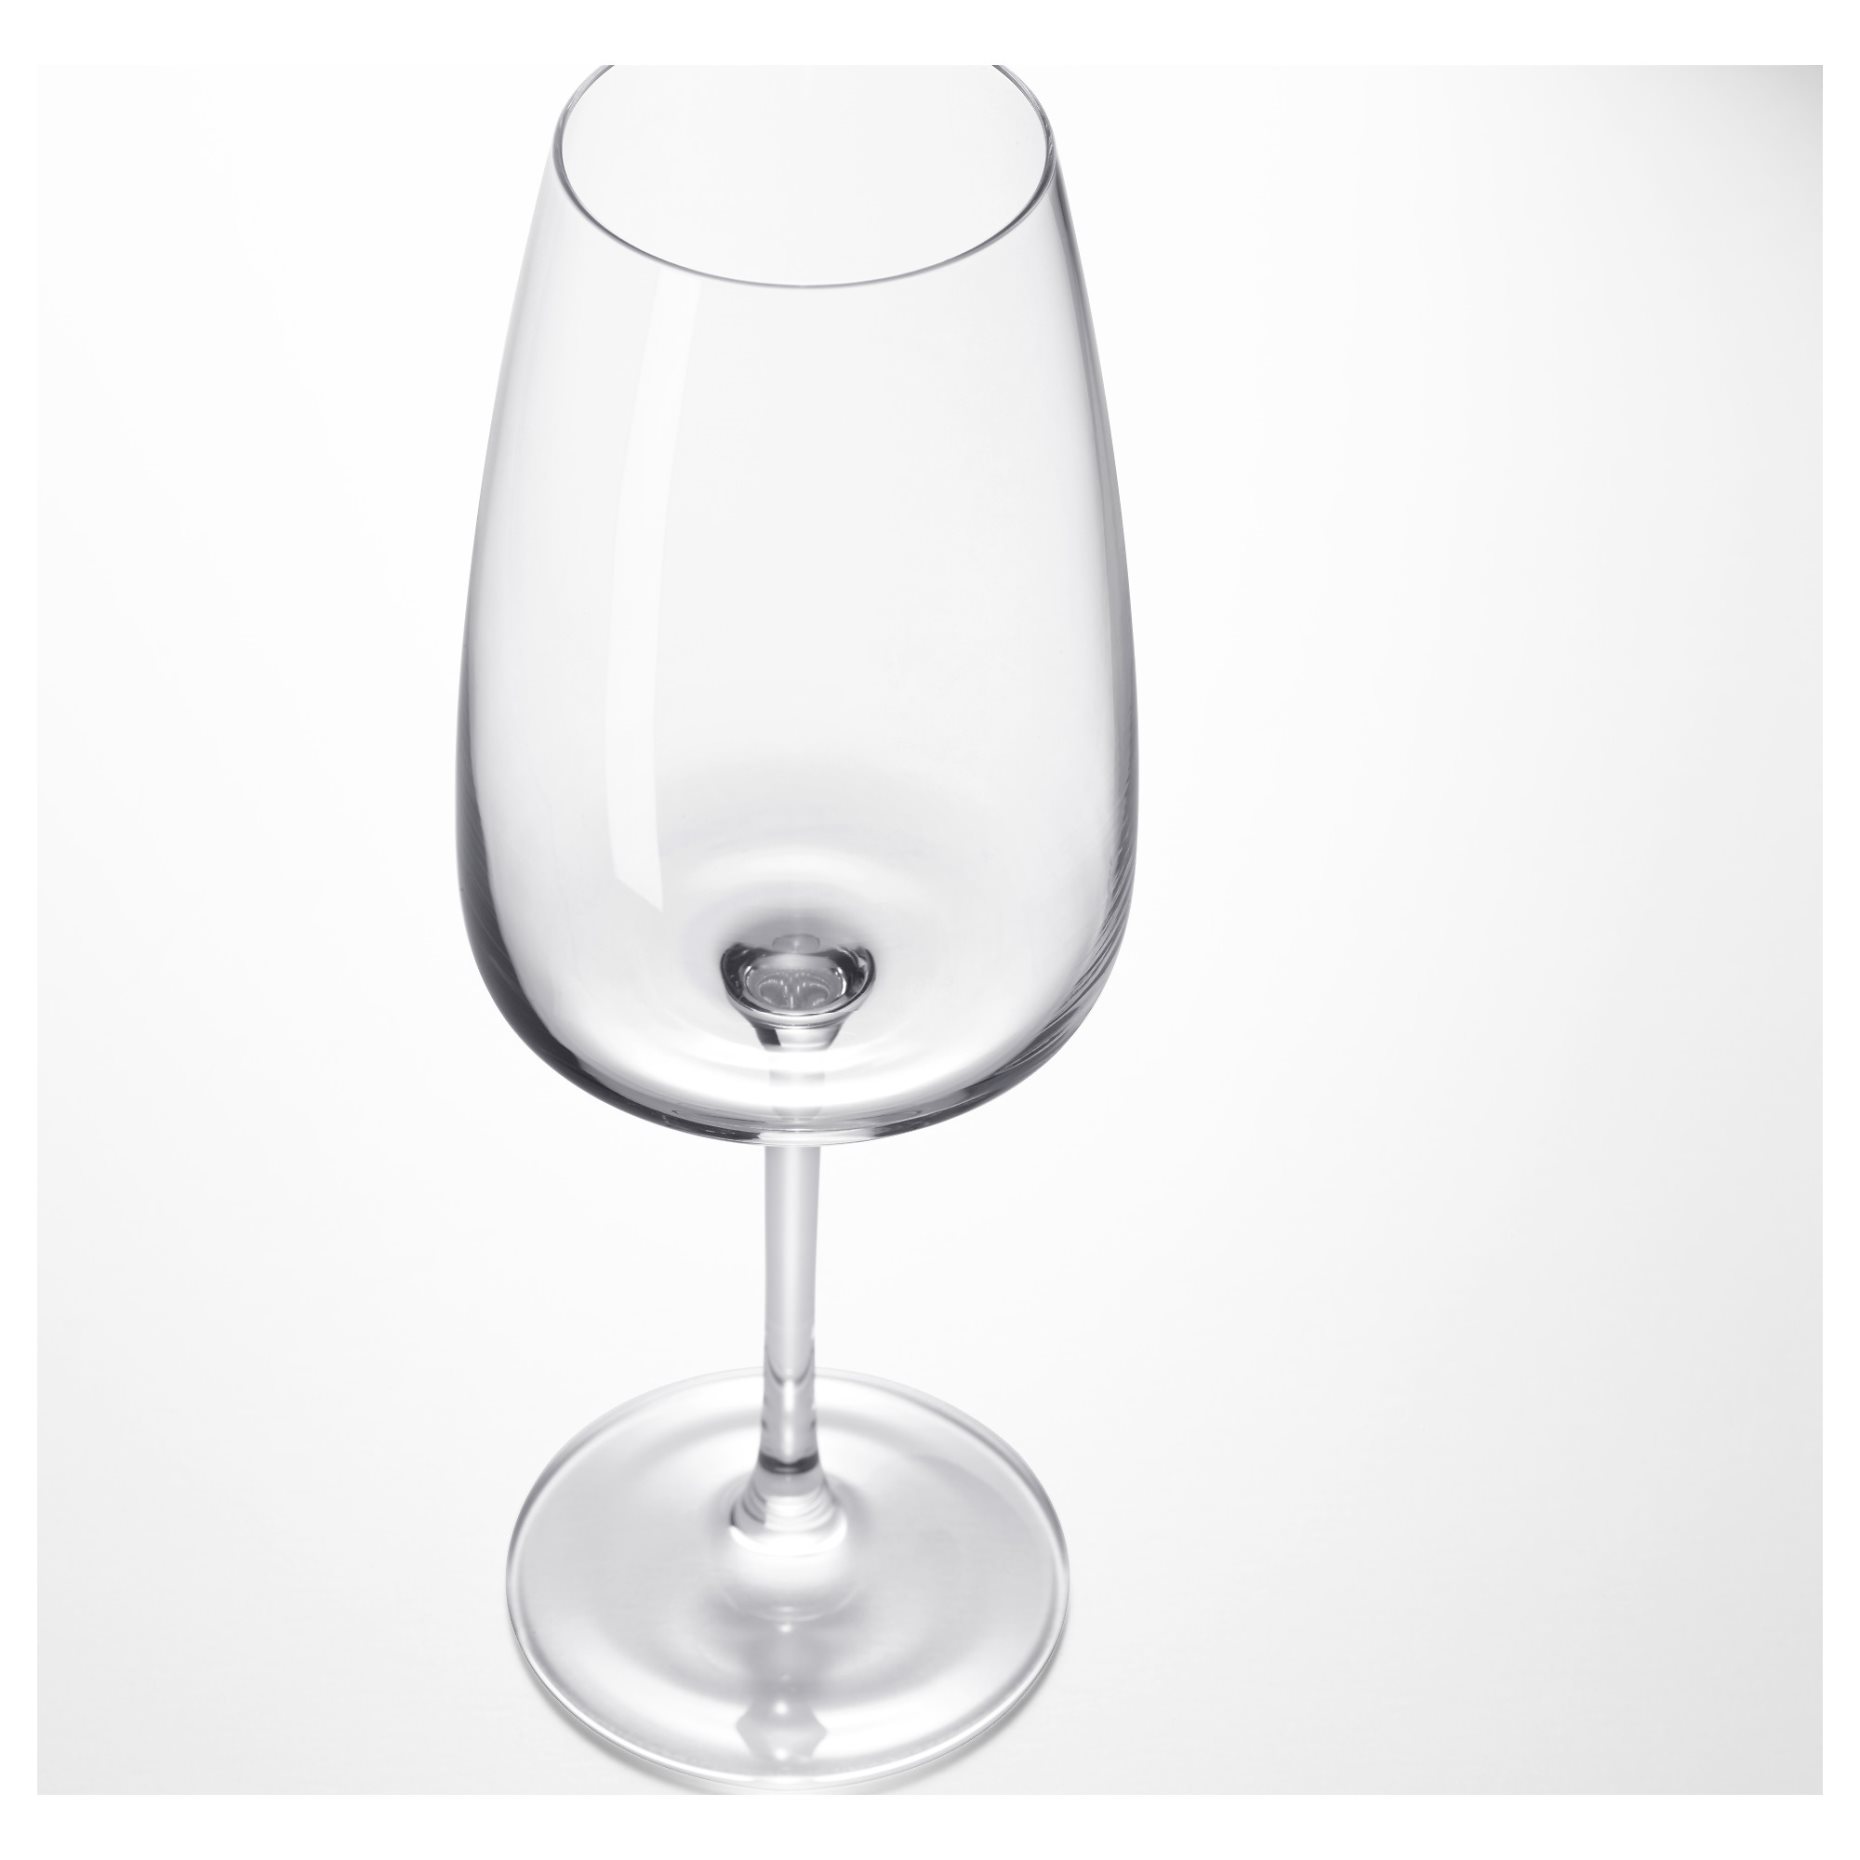 DYRGRIP, white wine glass, 803.093.02